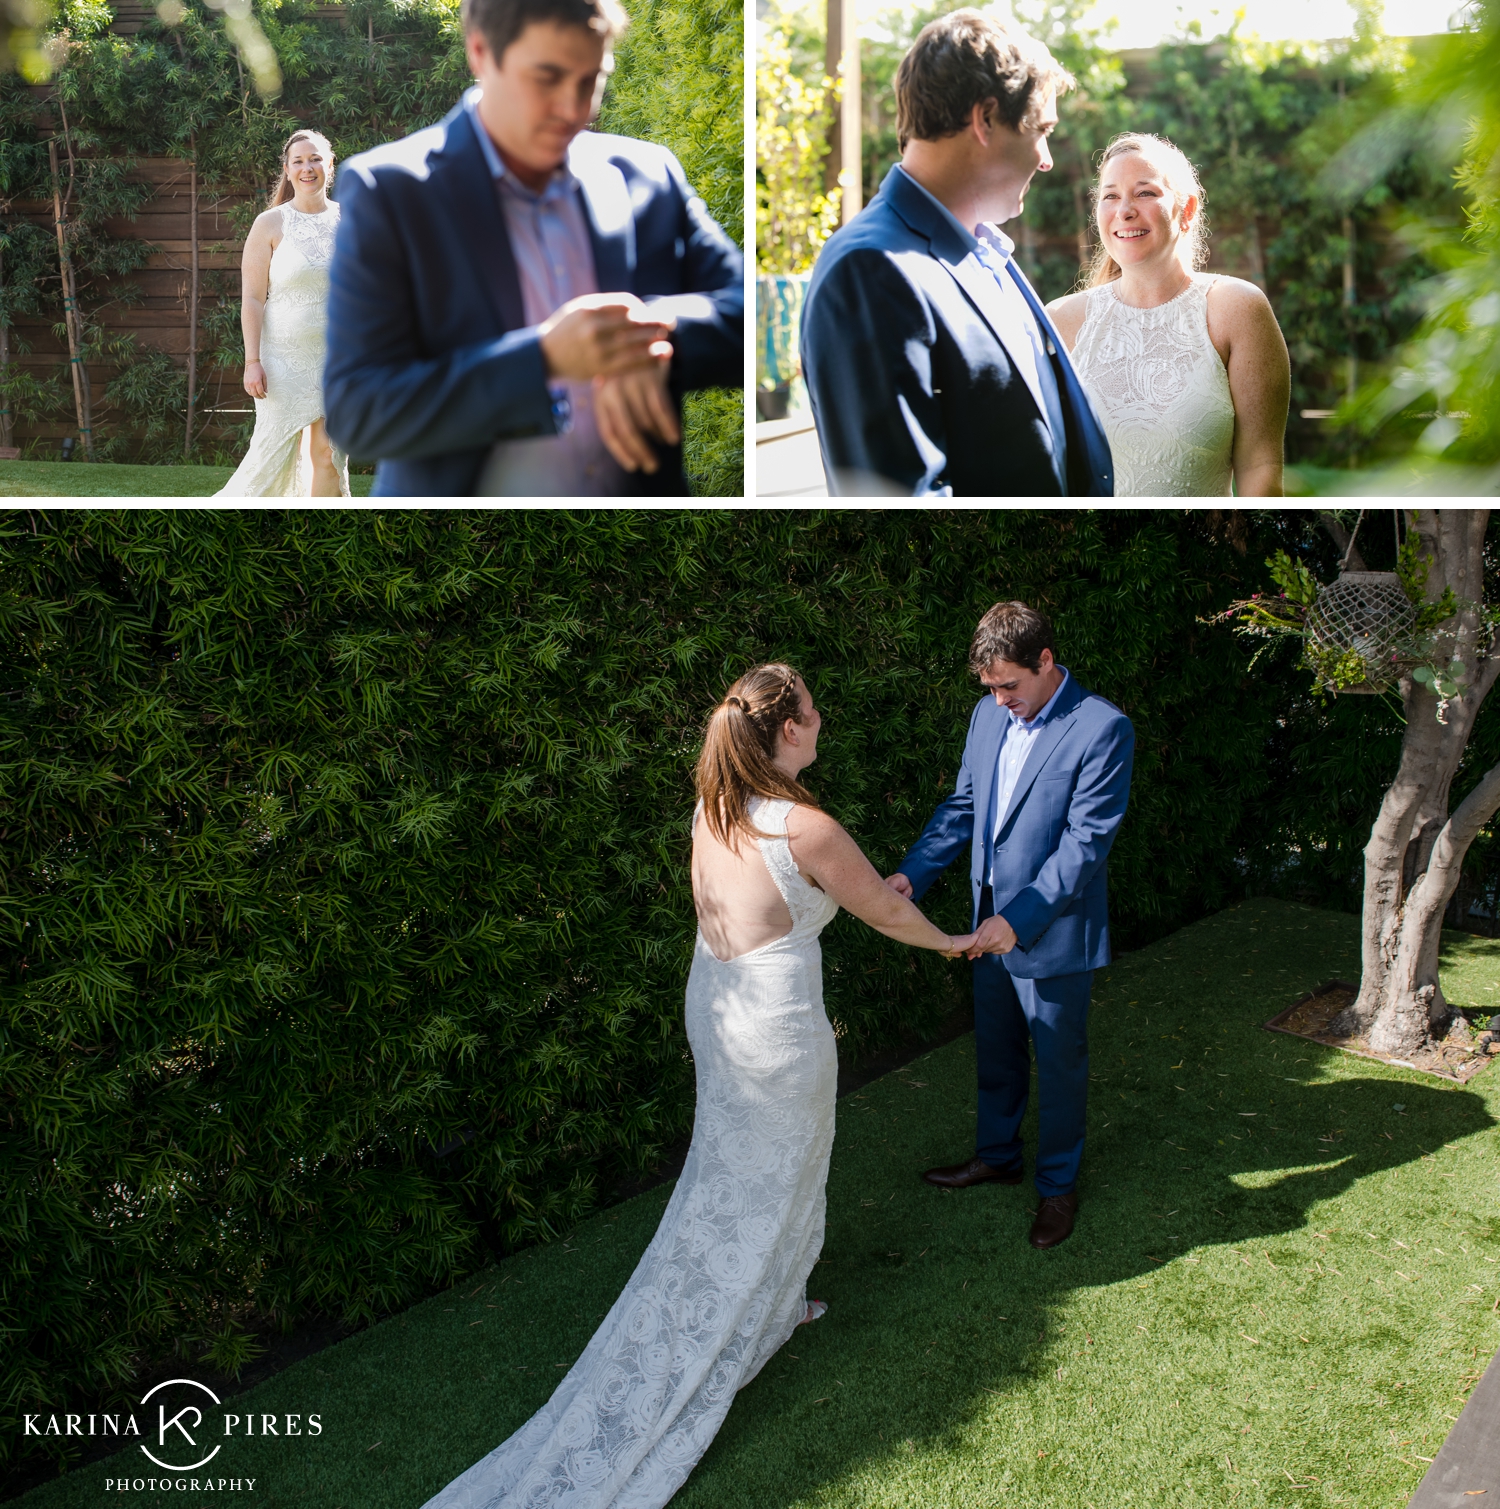 First look - Lindsay and Kyle’s Backyard Wedding in Santa Monica